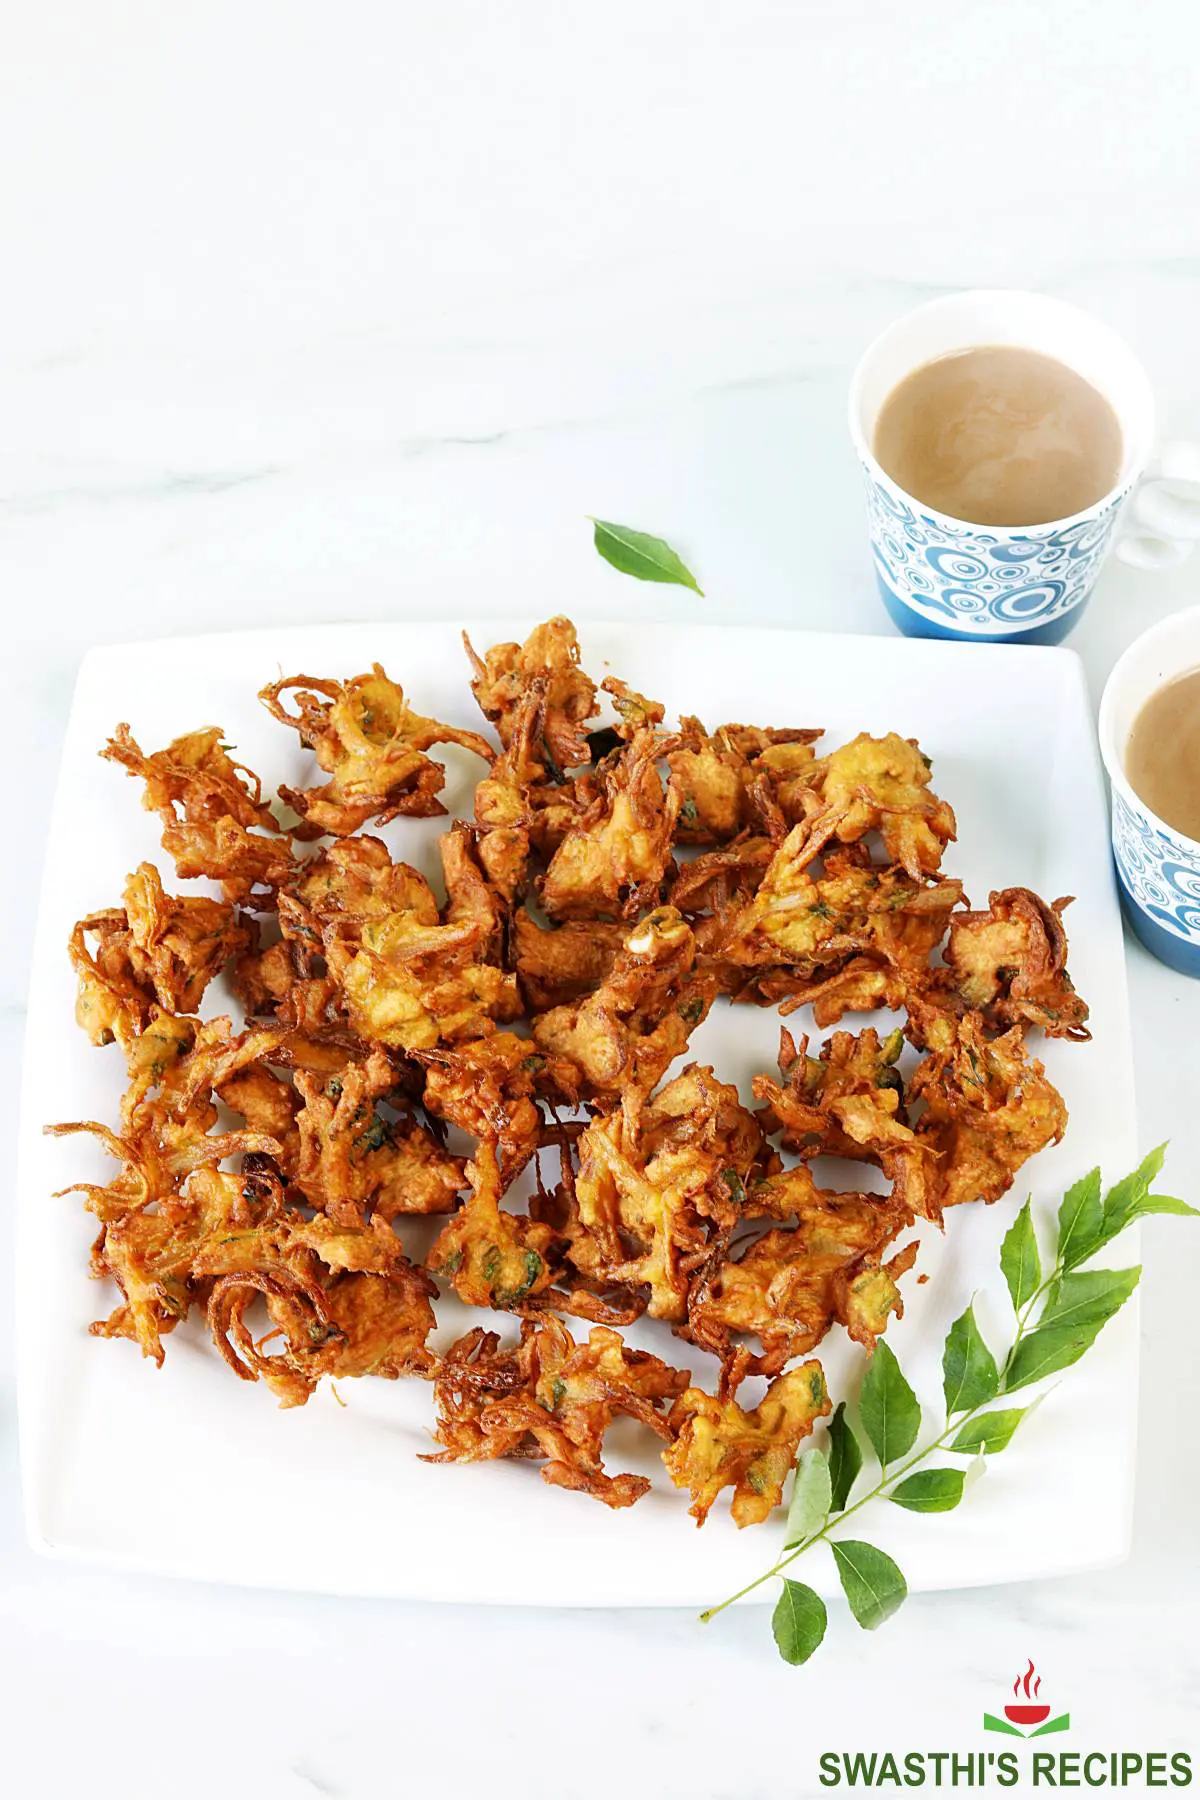 Masala Chai Recipe (Masala Tea) - Swasthi's Recipes